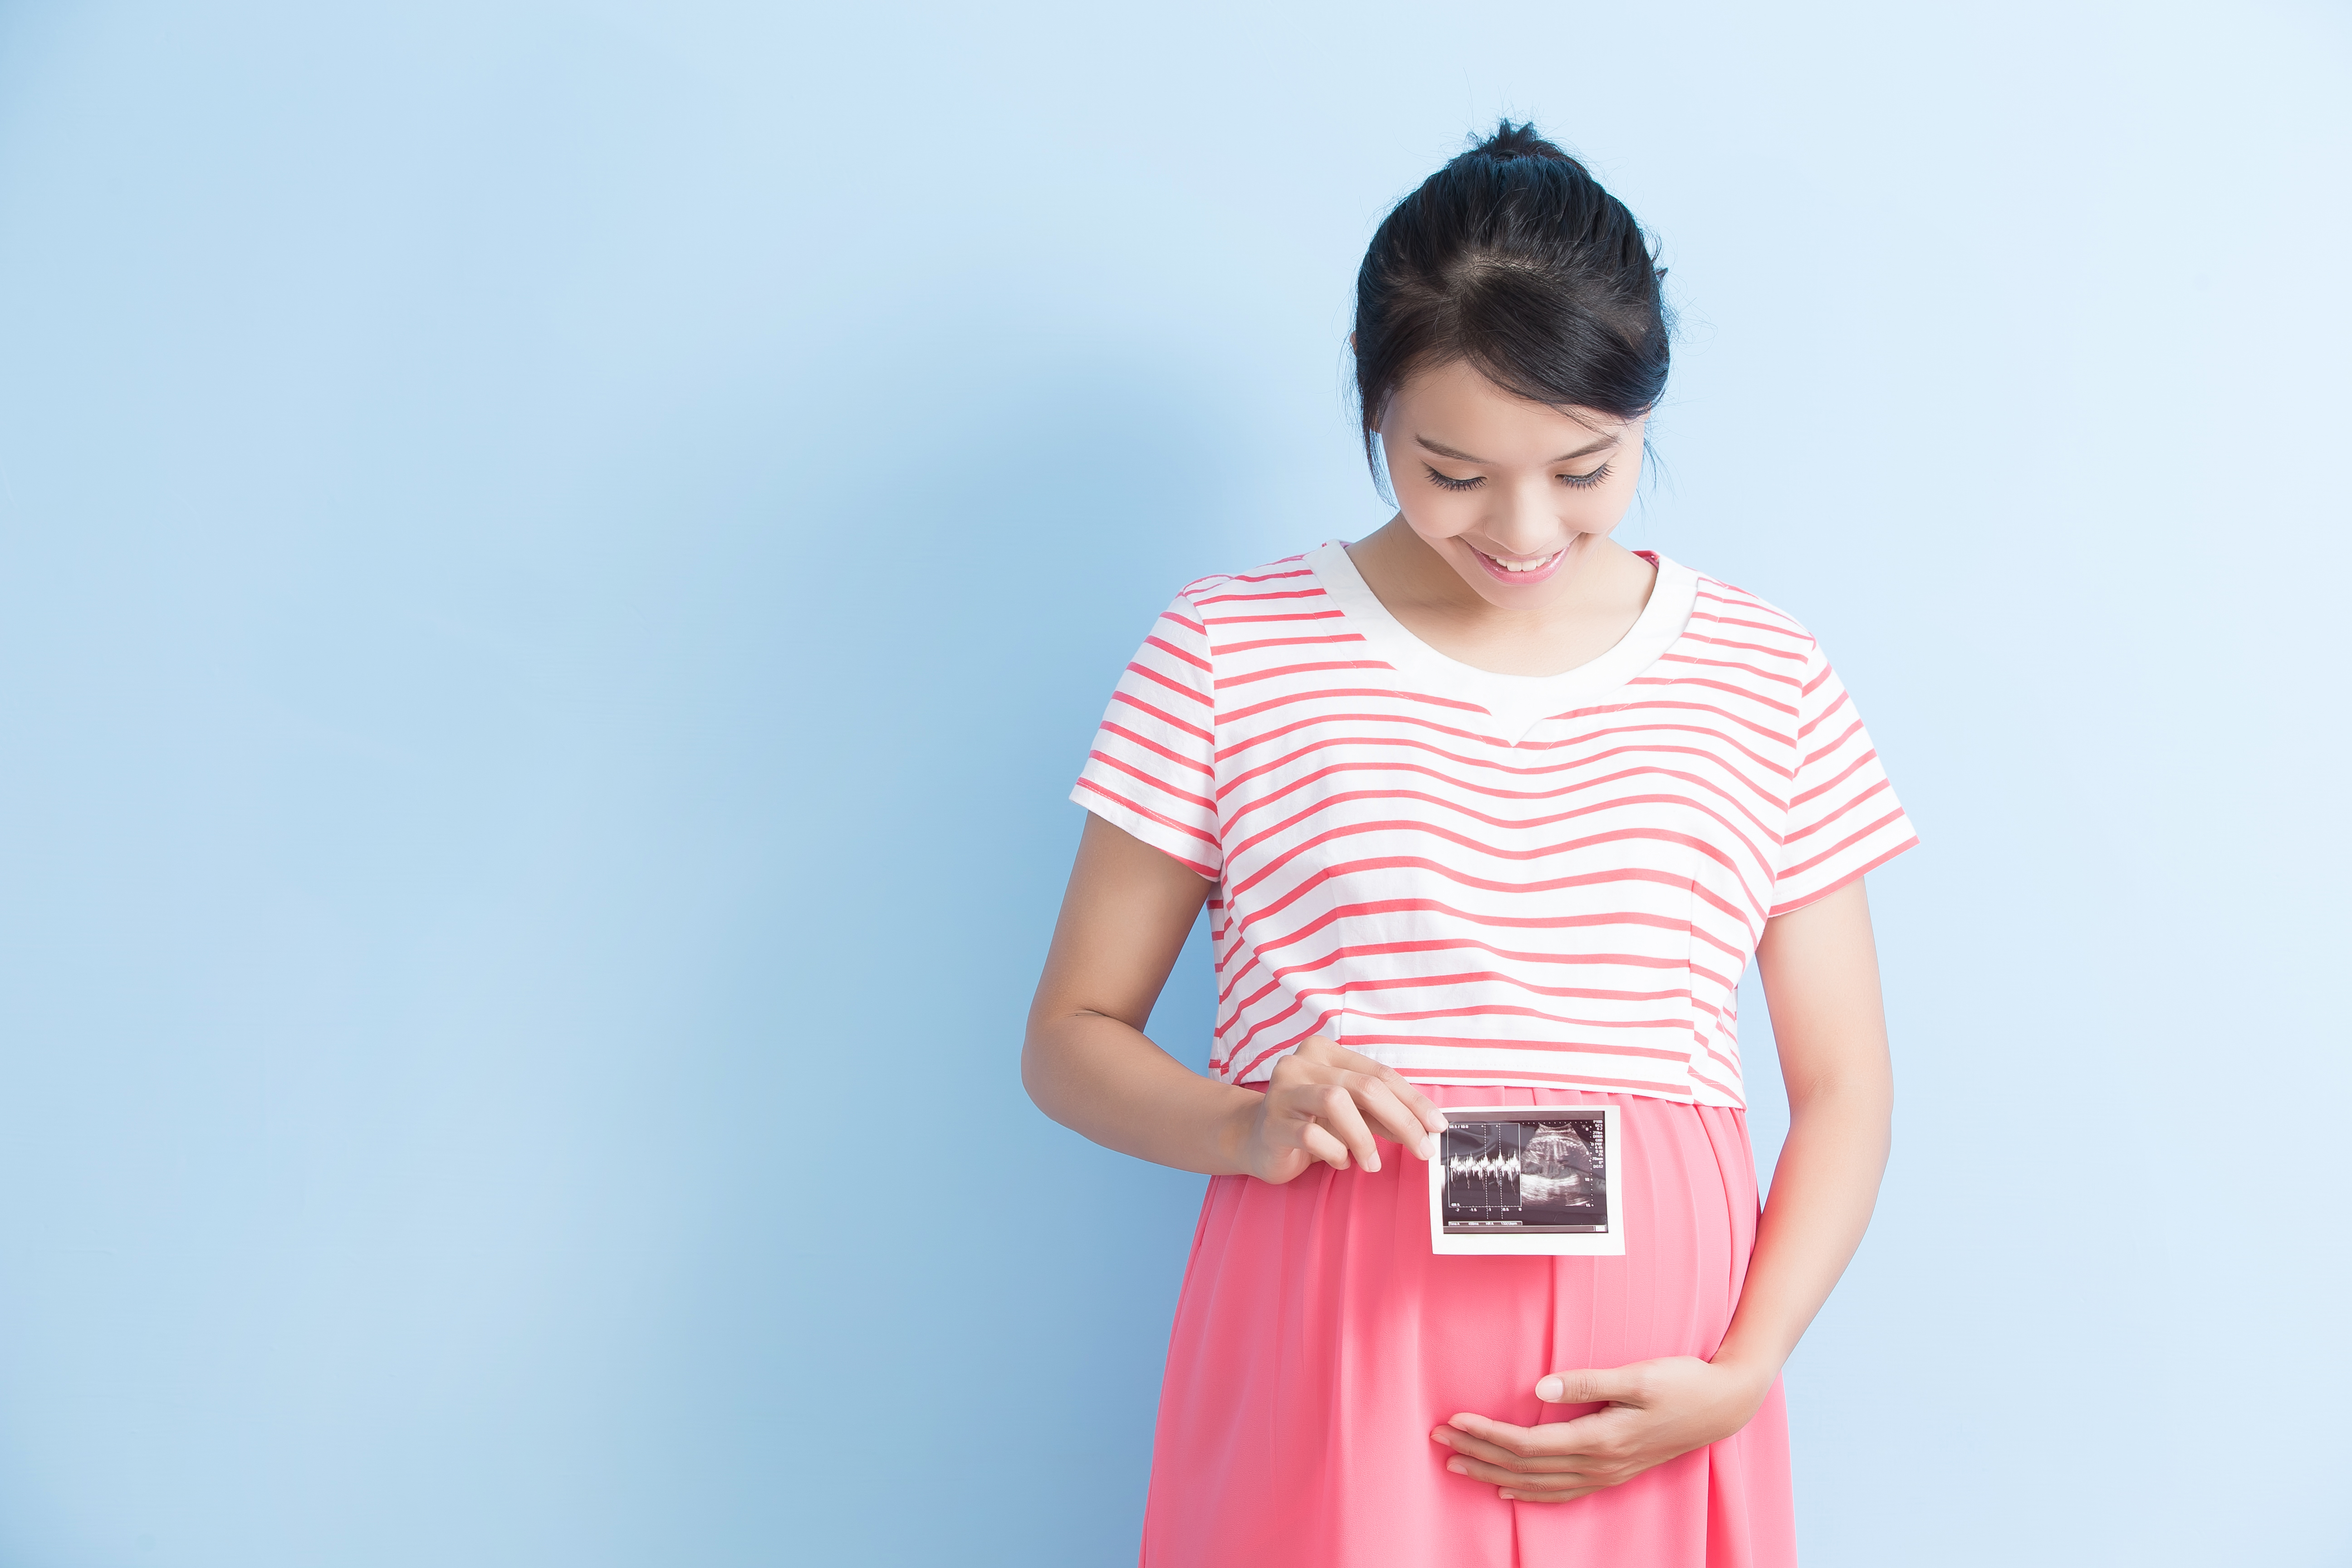 femme enceinte photo échographie fond bleu